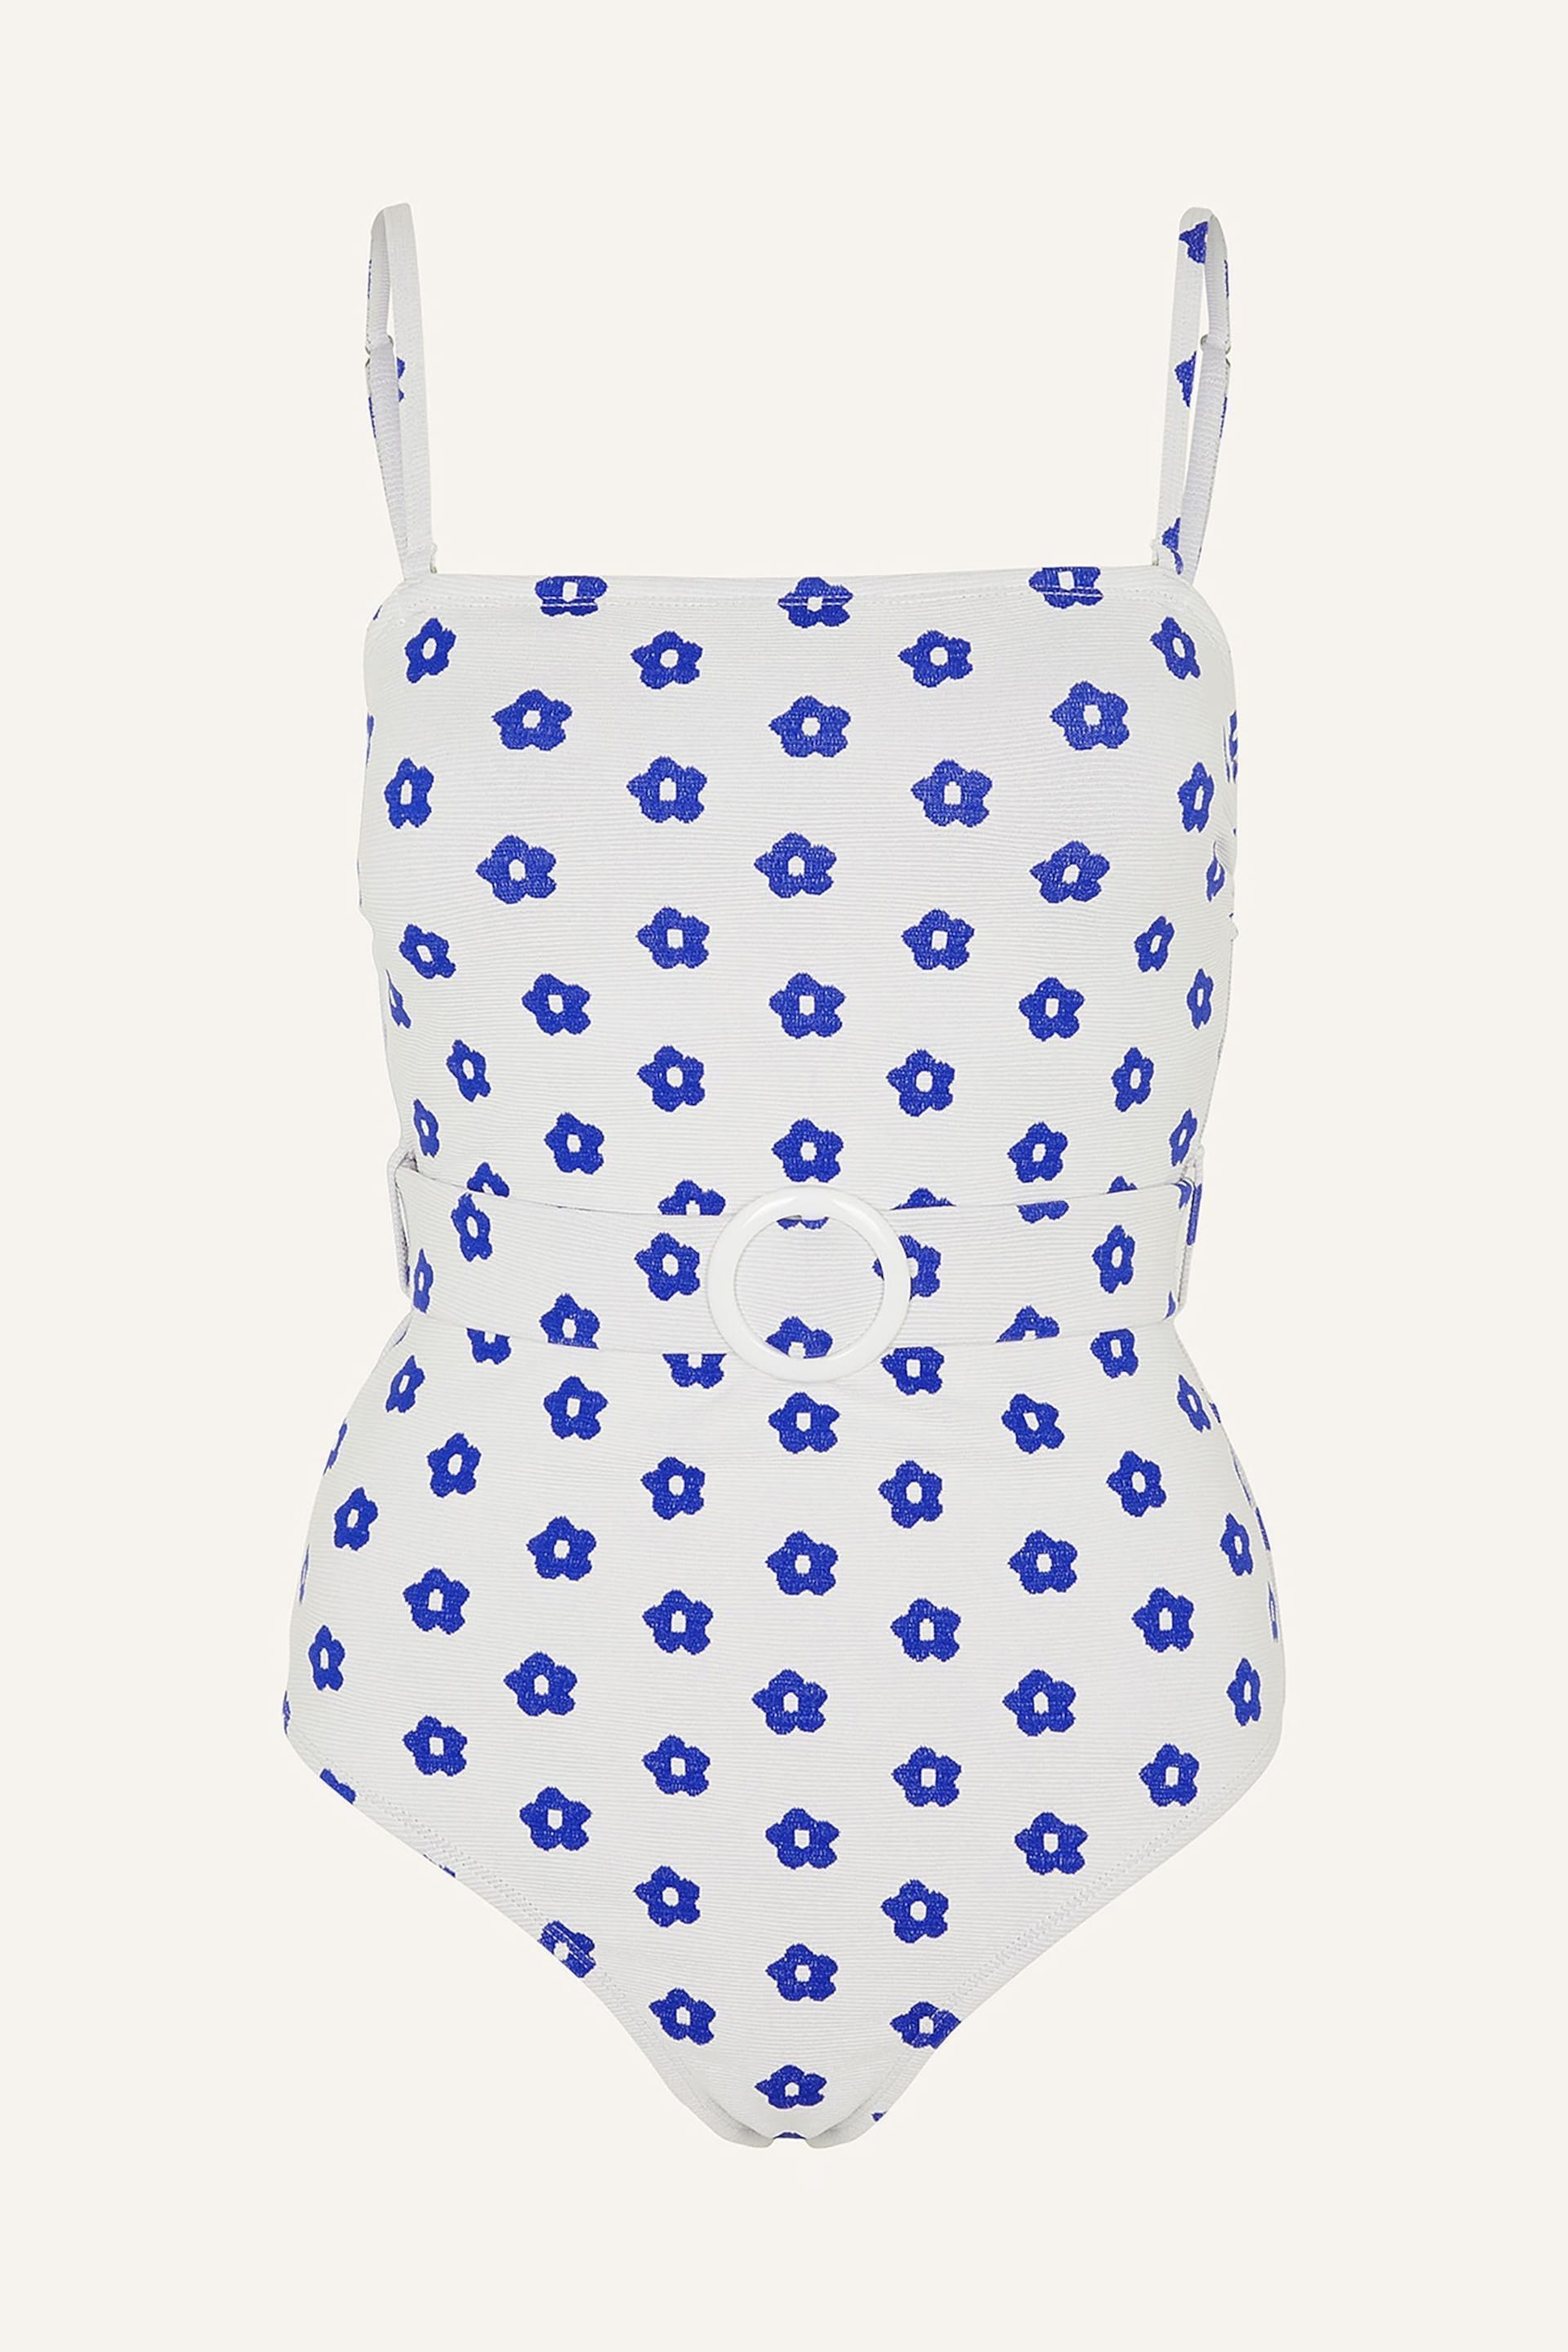 Accessorize White Daisy Print Belt Swimsuit - Image 4 of 4